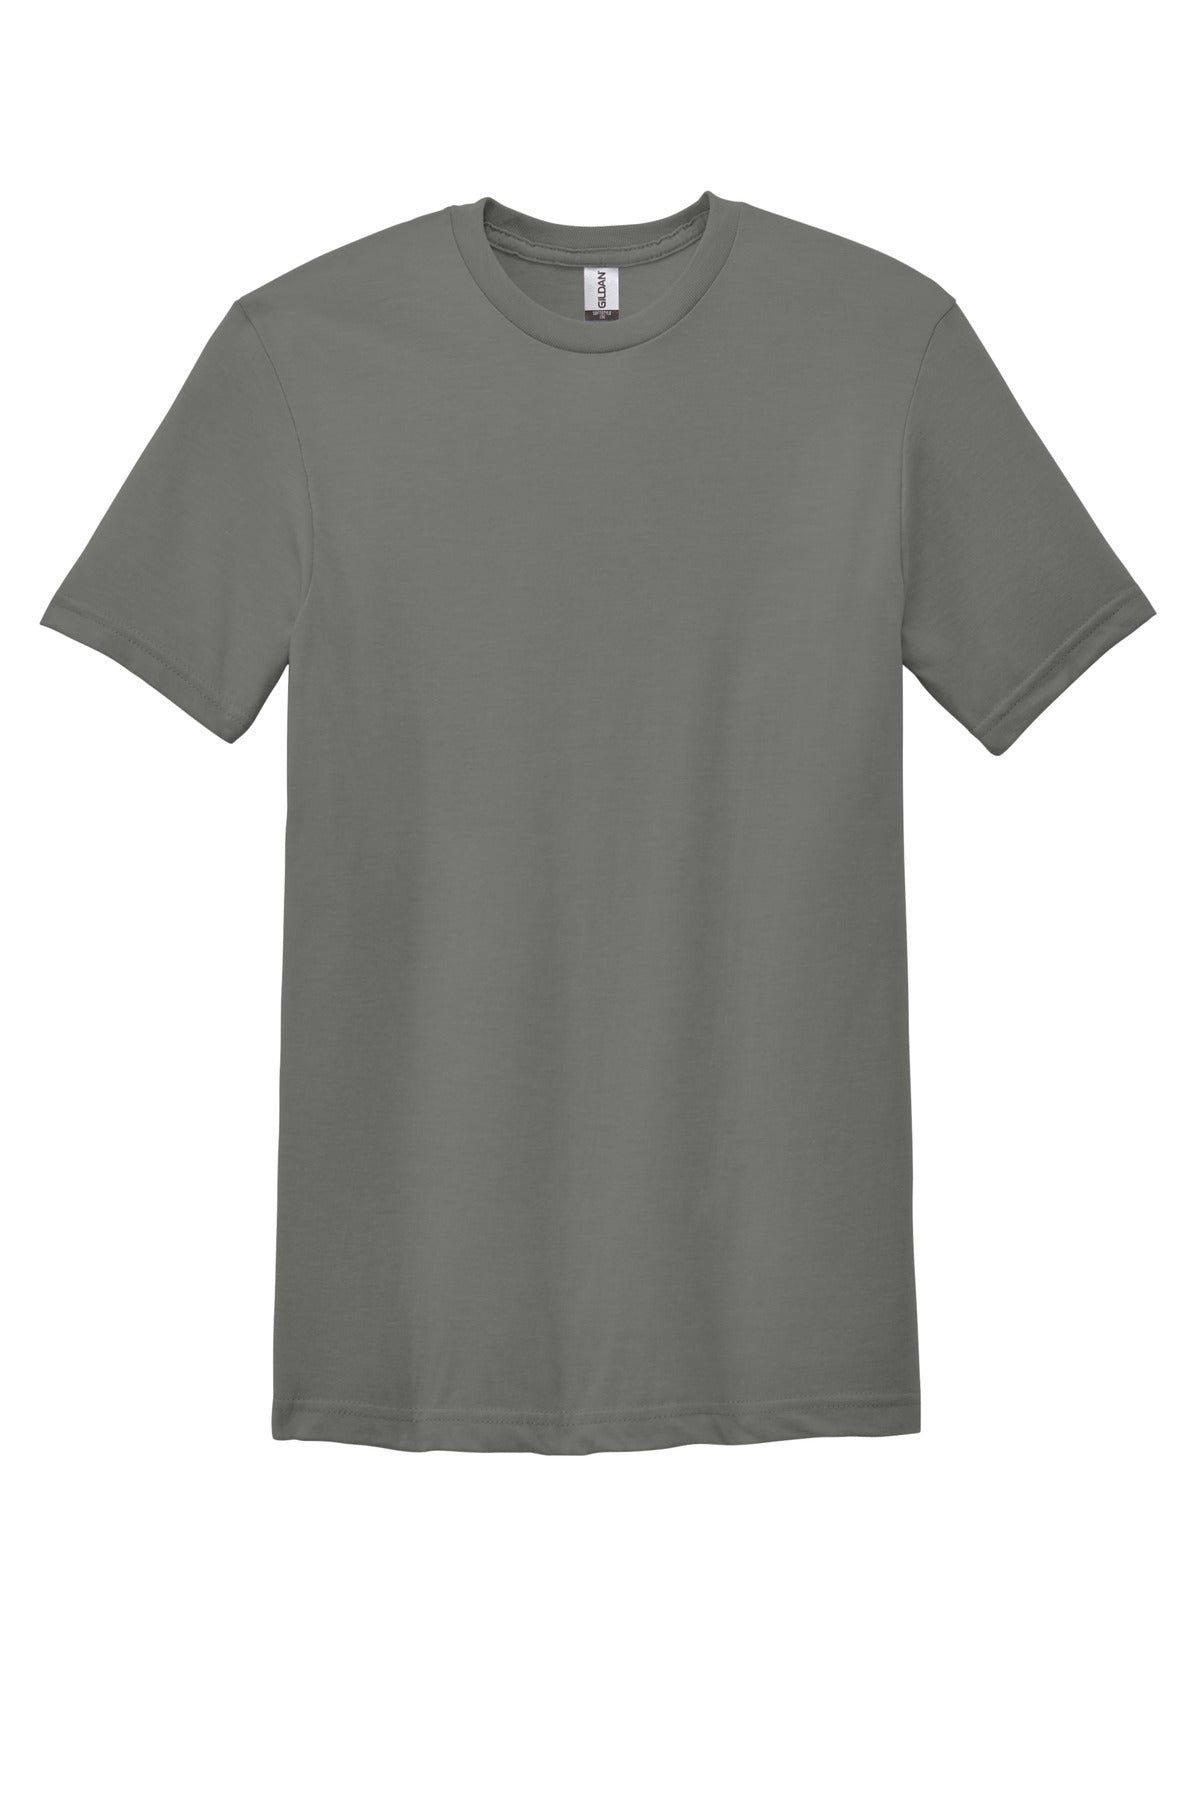 Gildan Softstyle CVC Tee 67000 - BT Imprintables Shirts